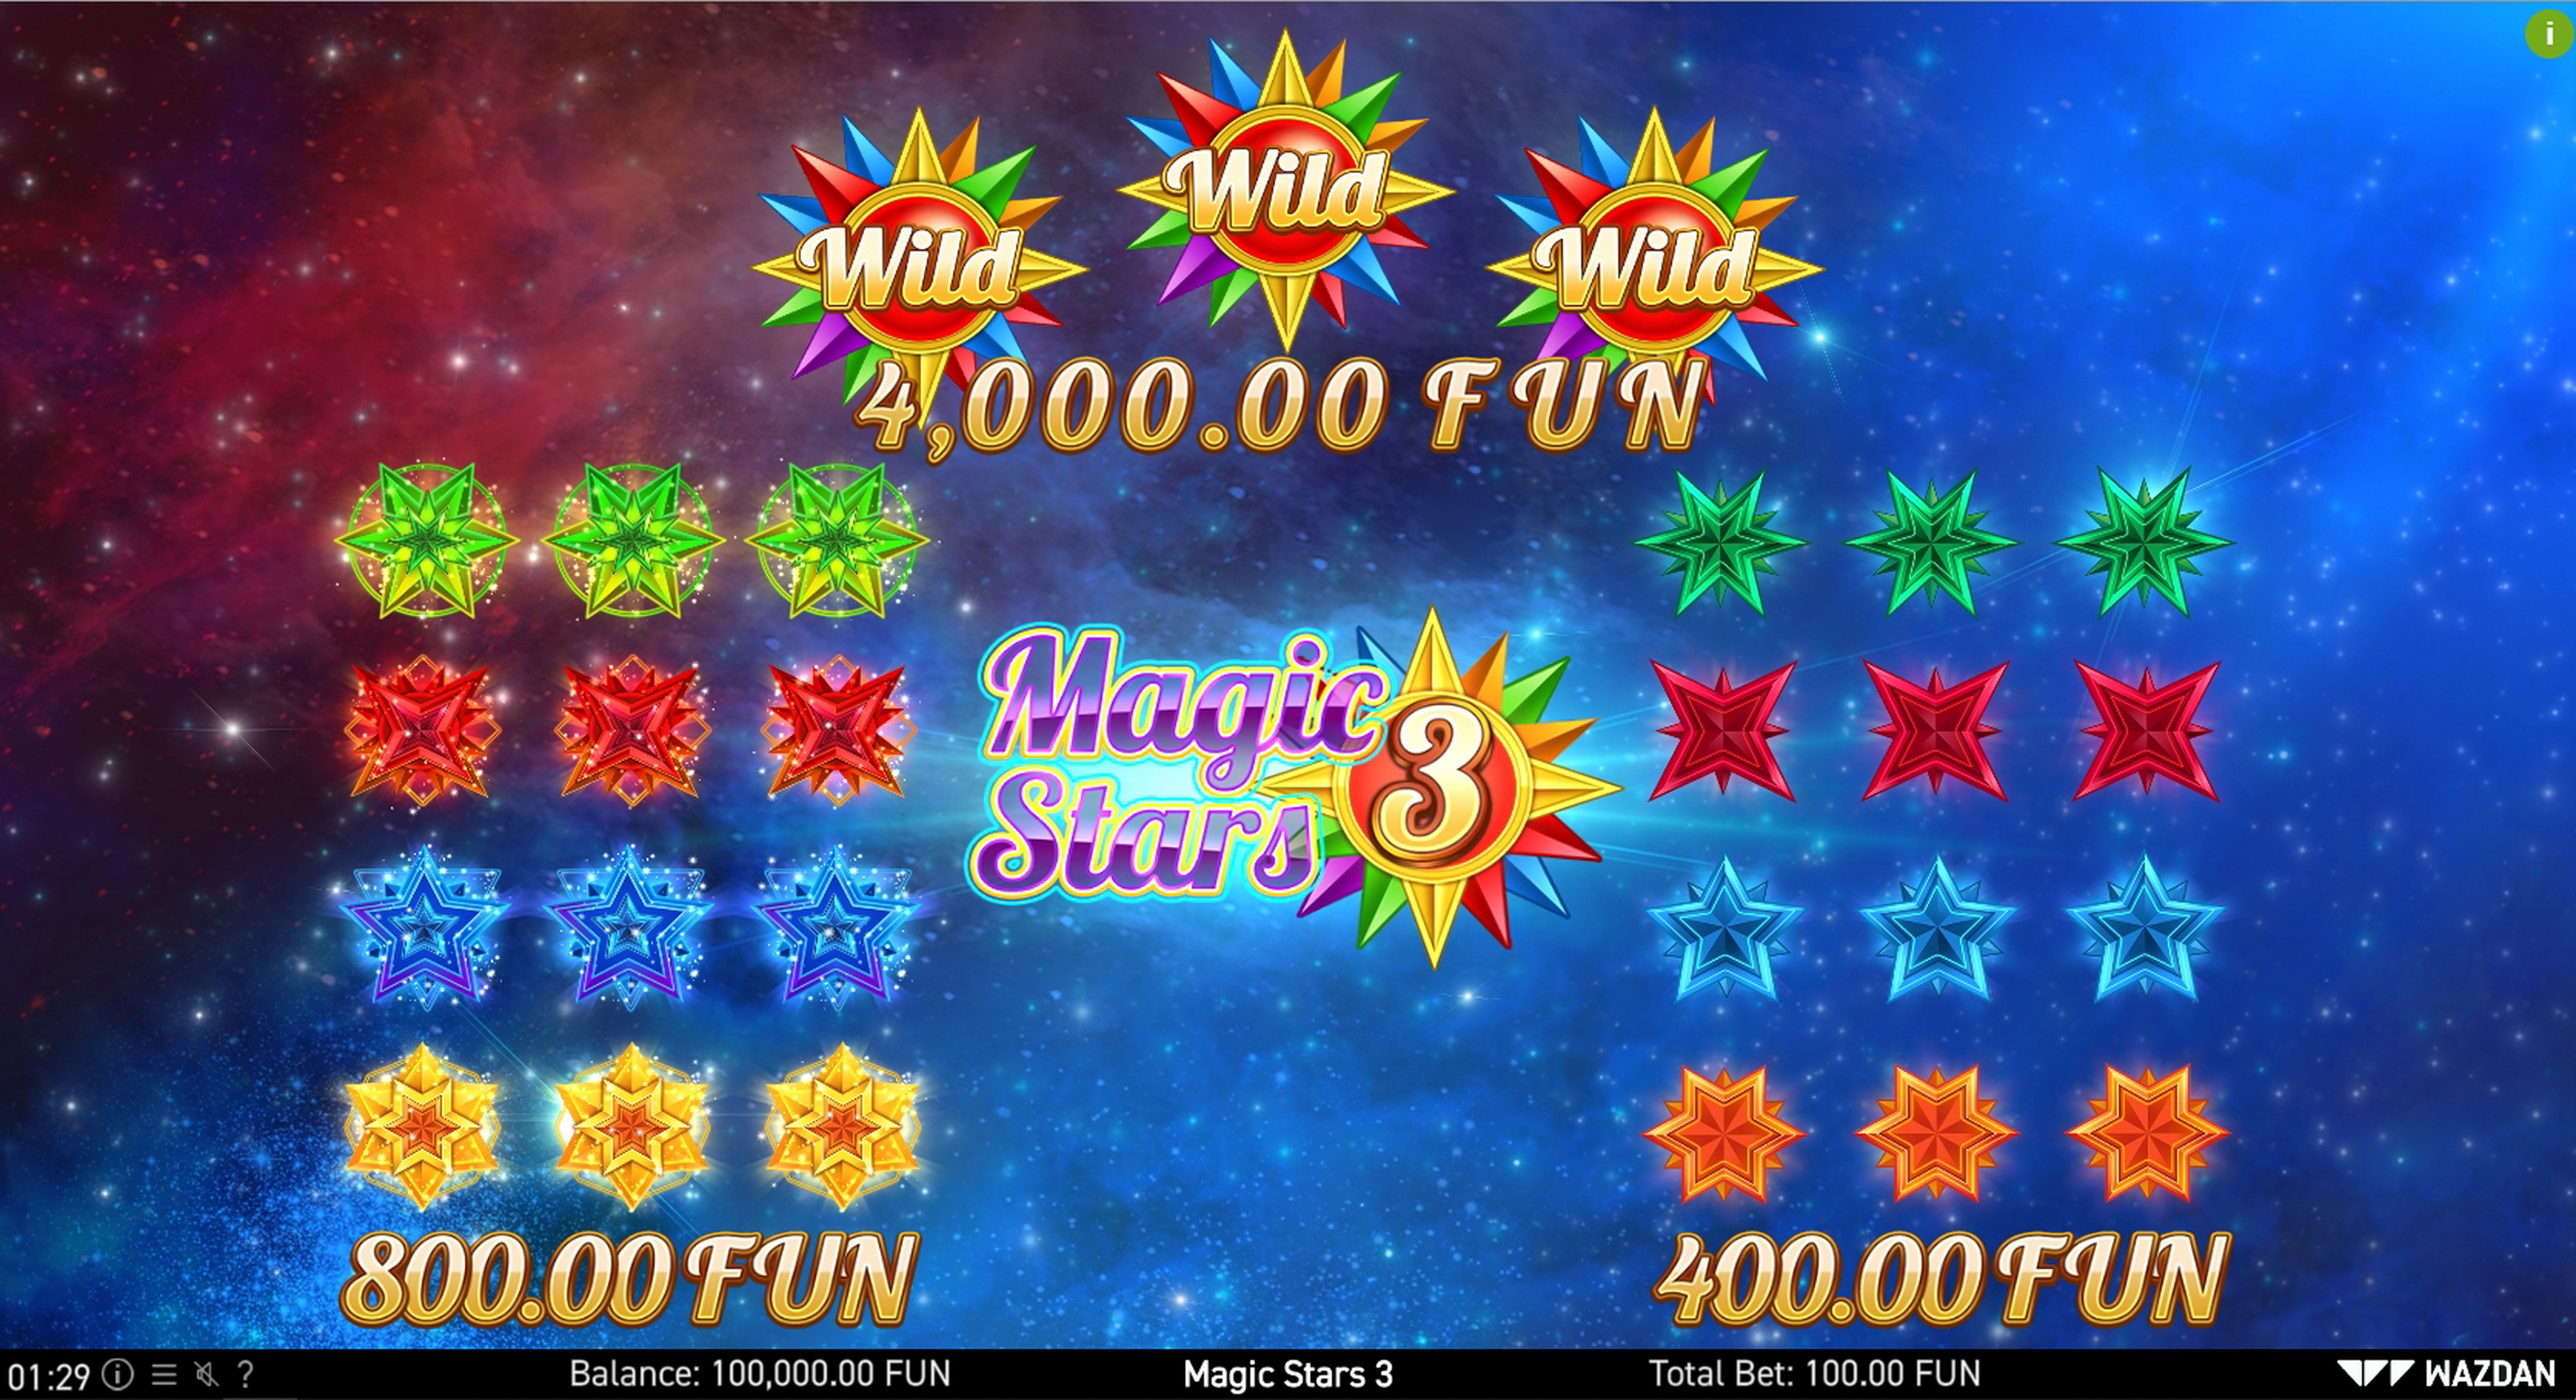 Info of Magic Stars 3 Slot Game by Wazdan